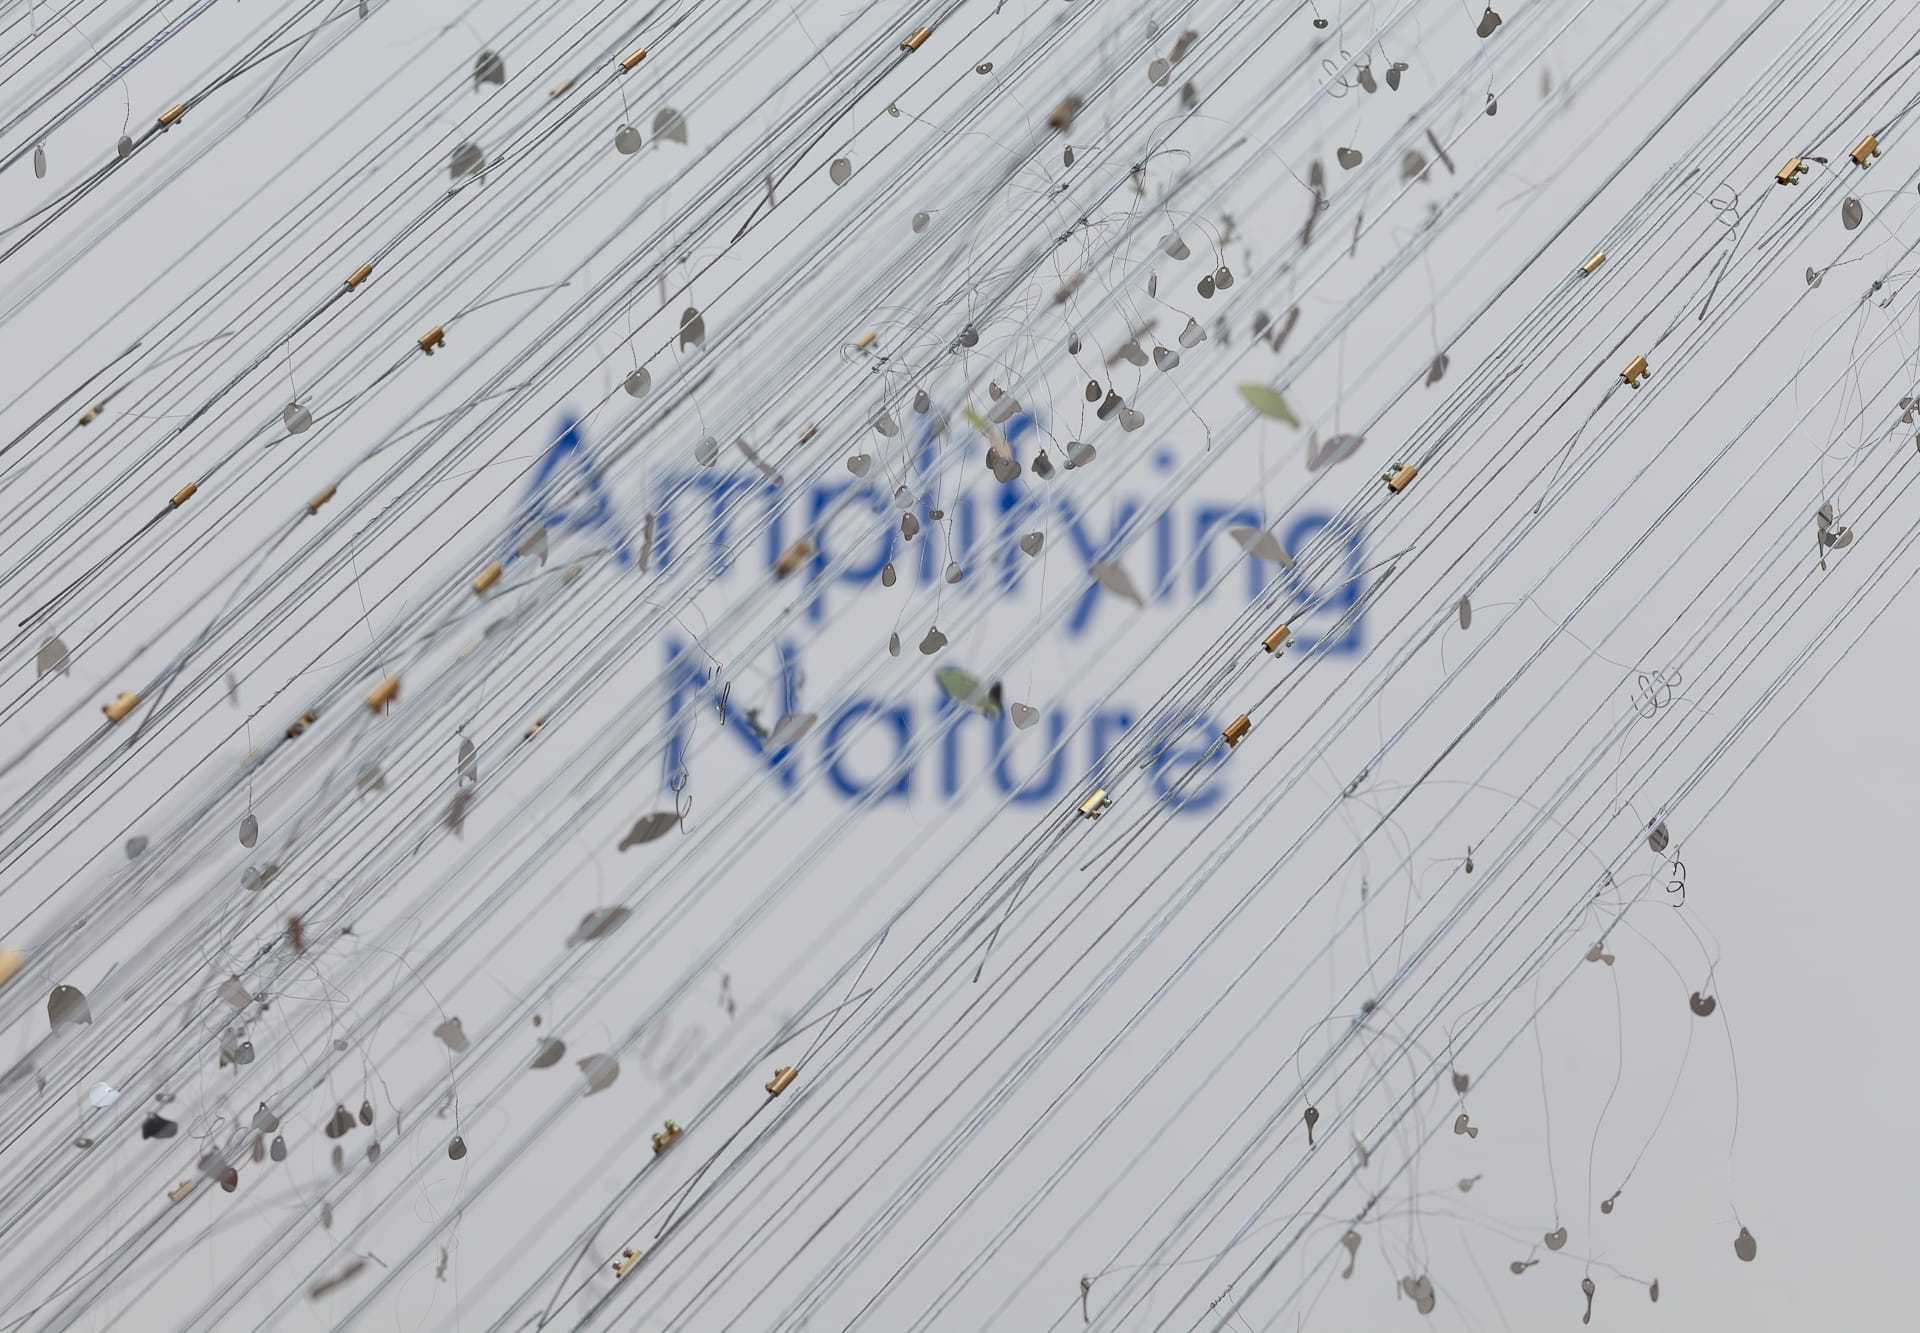 amplifying_nature_exhibition_fot_anna_zagrodzka-9